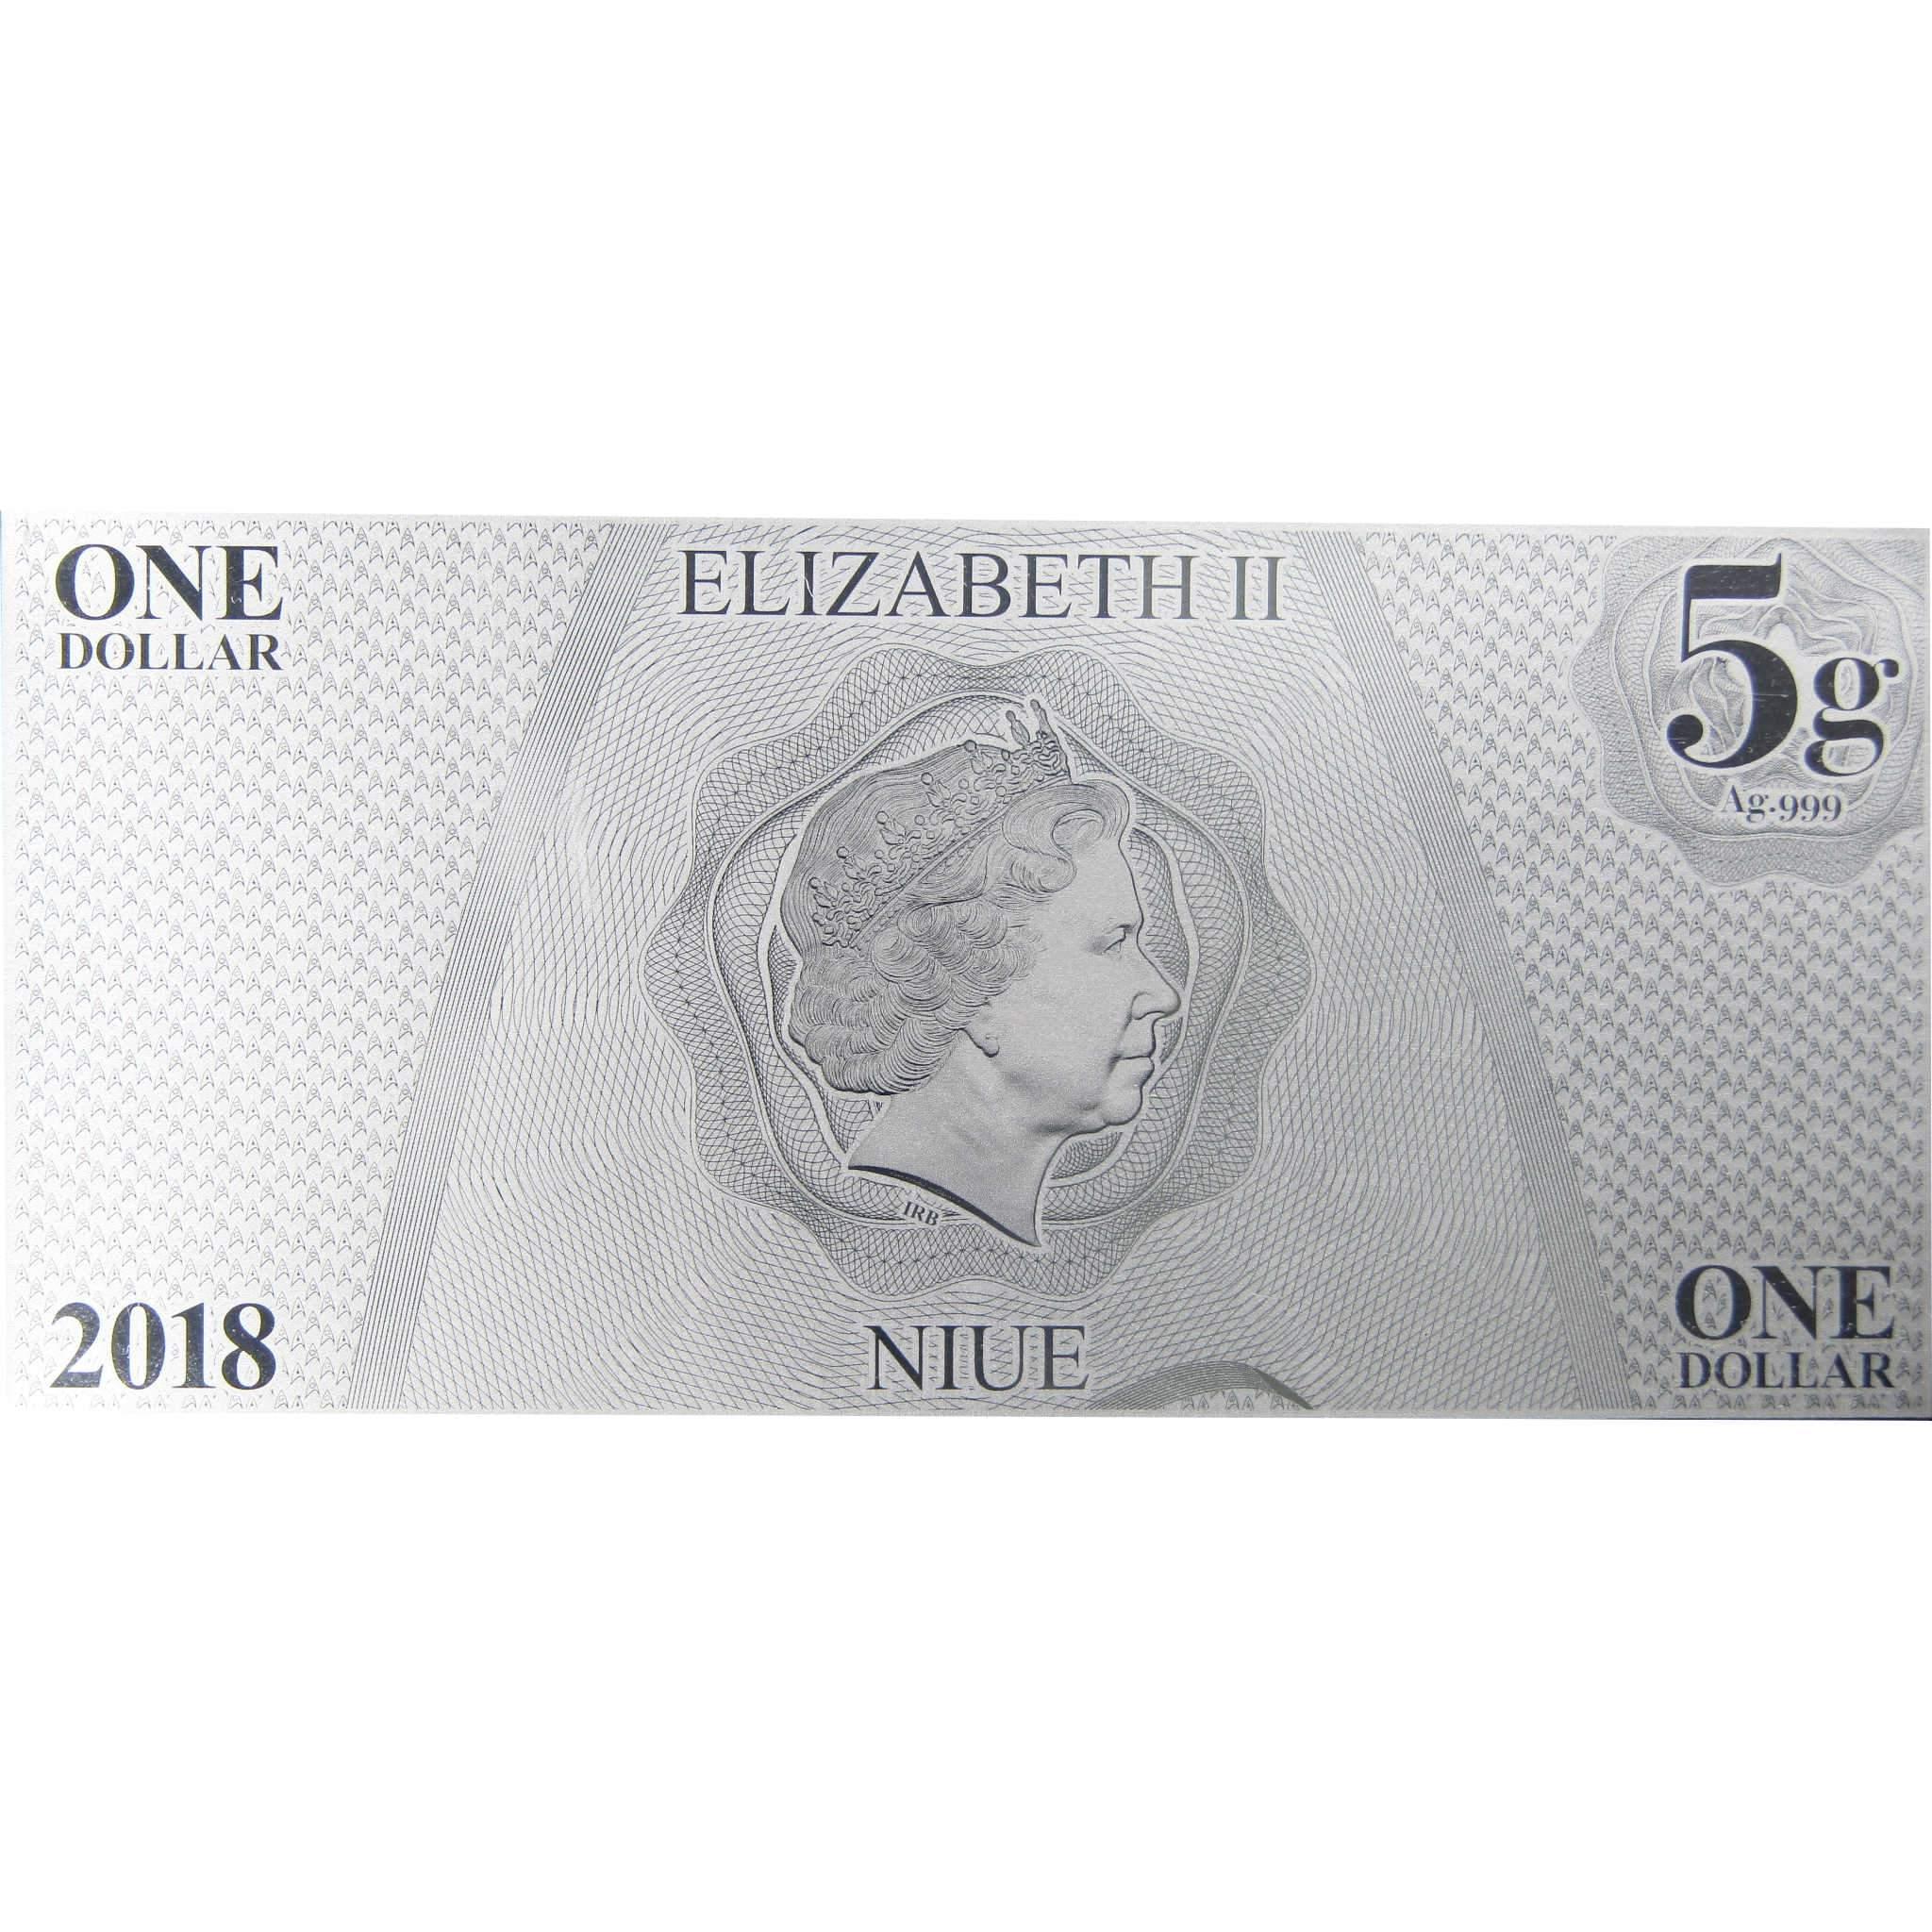 Star Trek Original Series Chekov 5g .999 Fine Silver $1 Coin Note 2018 Niue